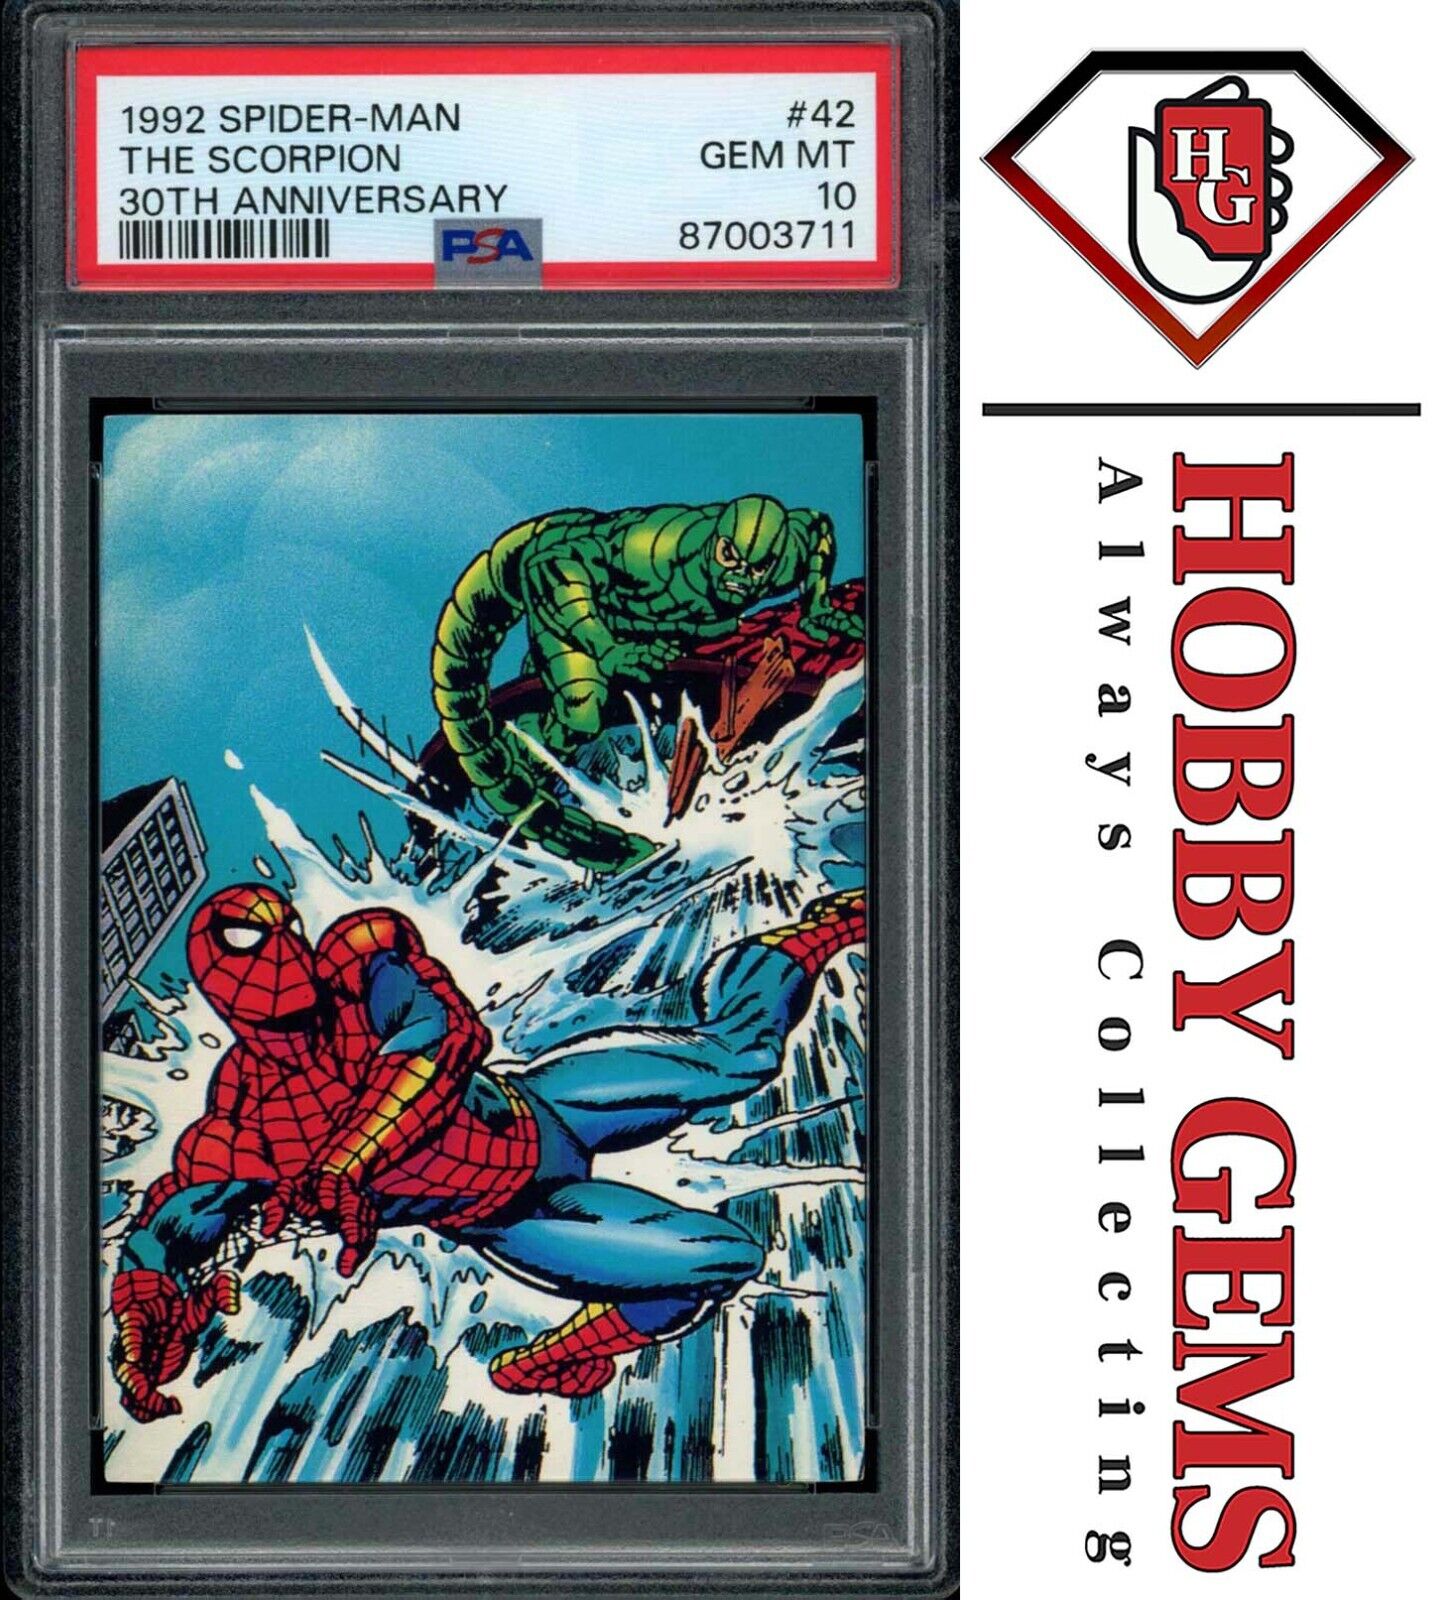 SPIDER-MAN THE SCORPION PSA 10 1992 Marvel Spider-Man 30th Anniversary #42